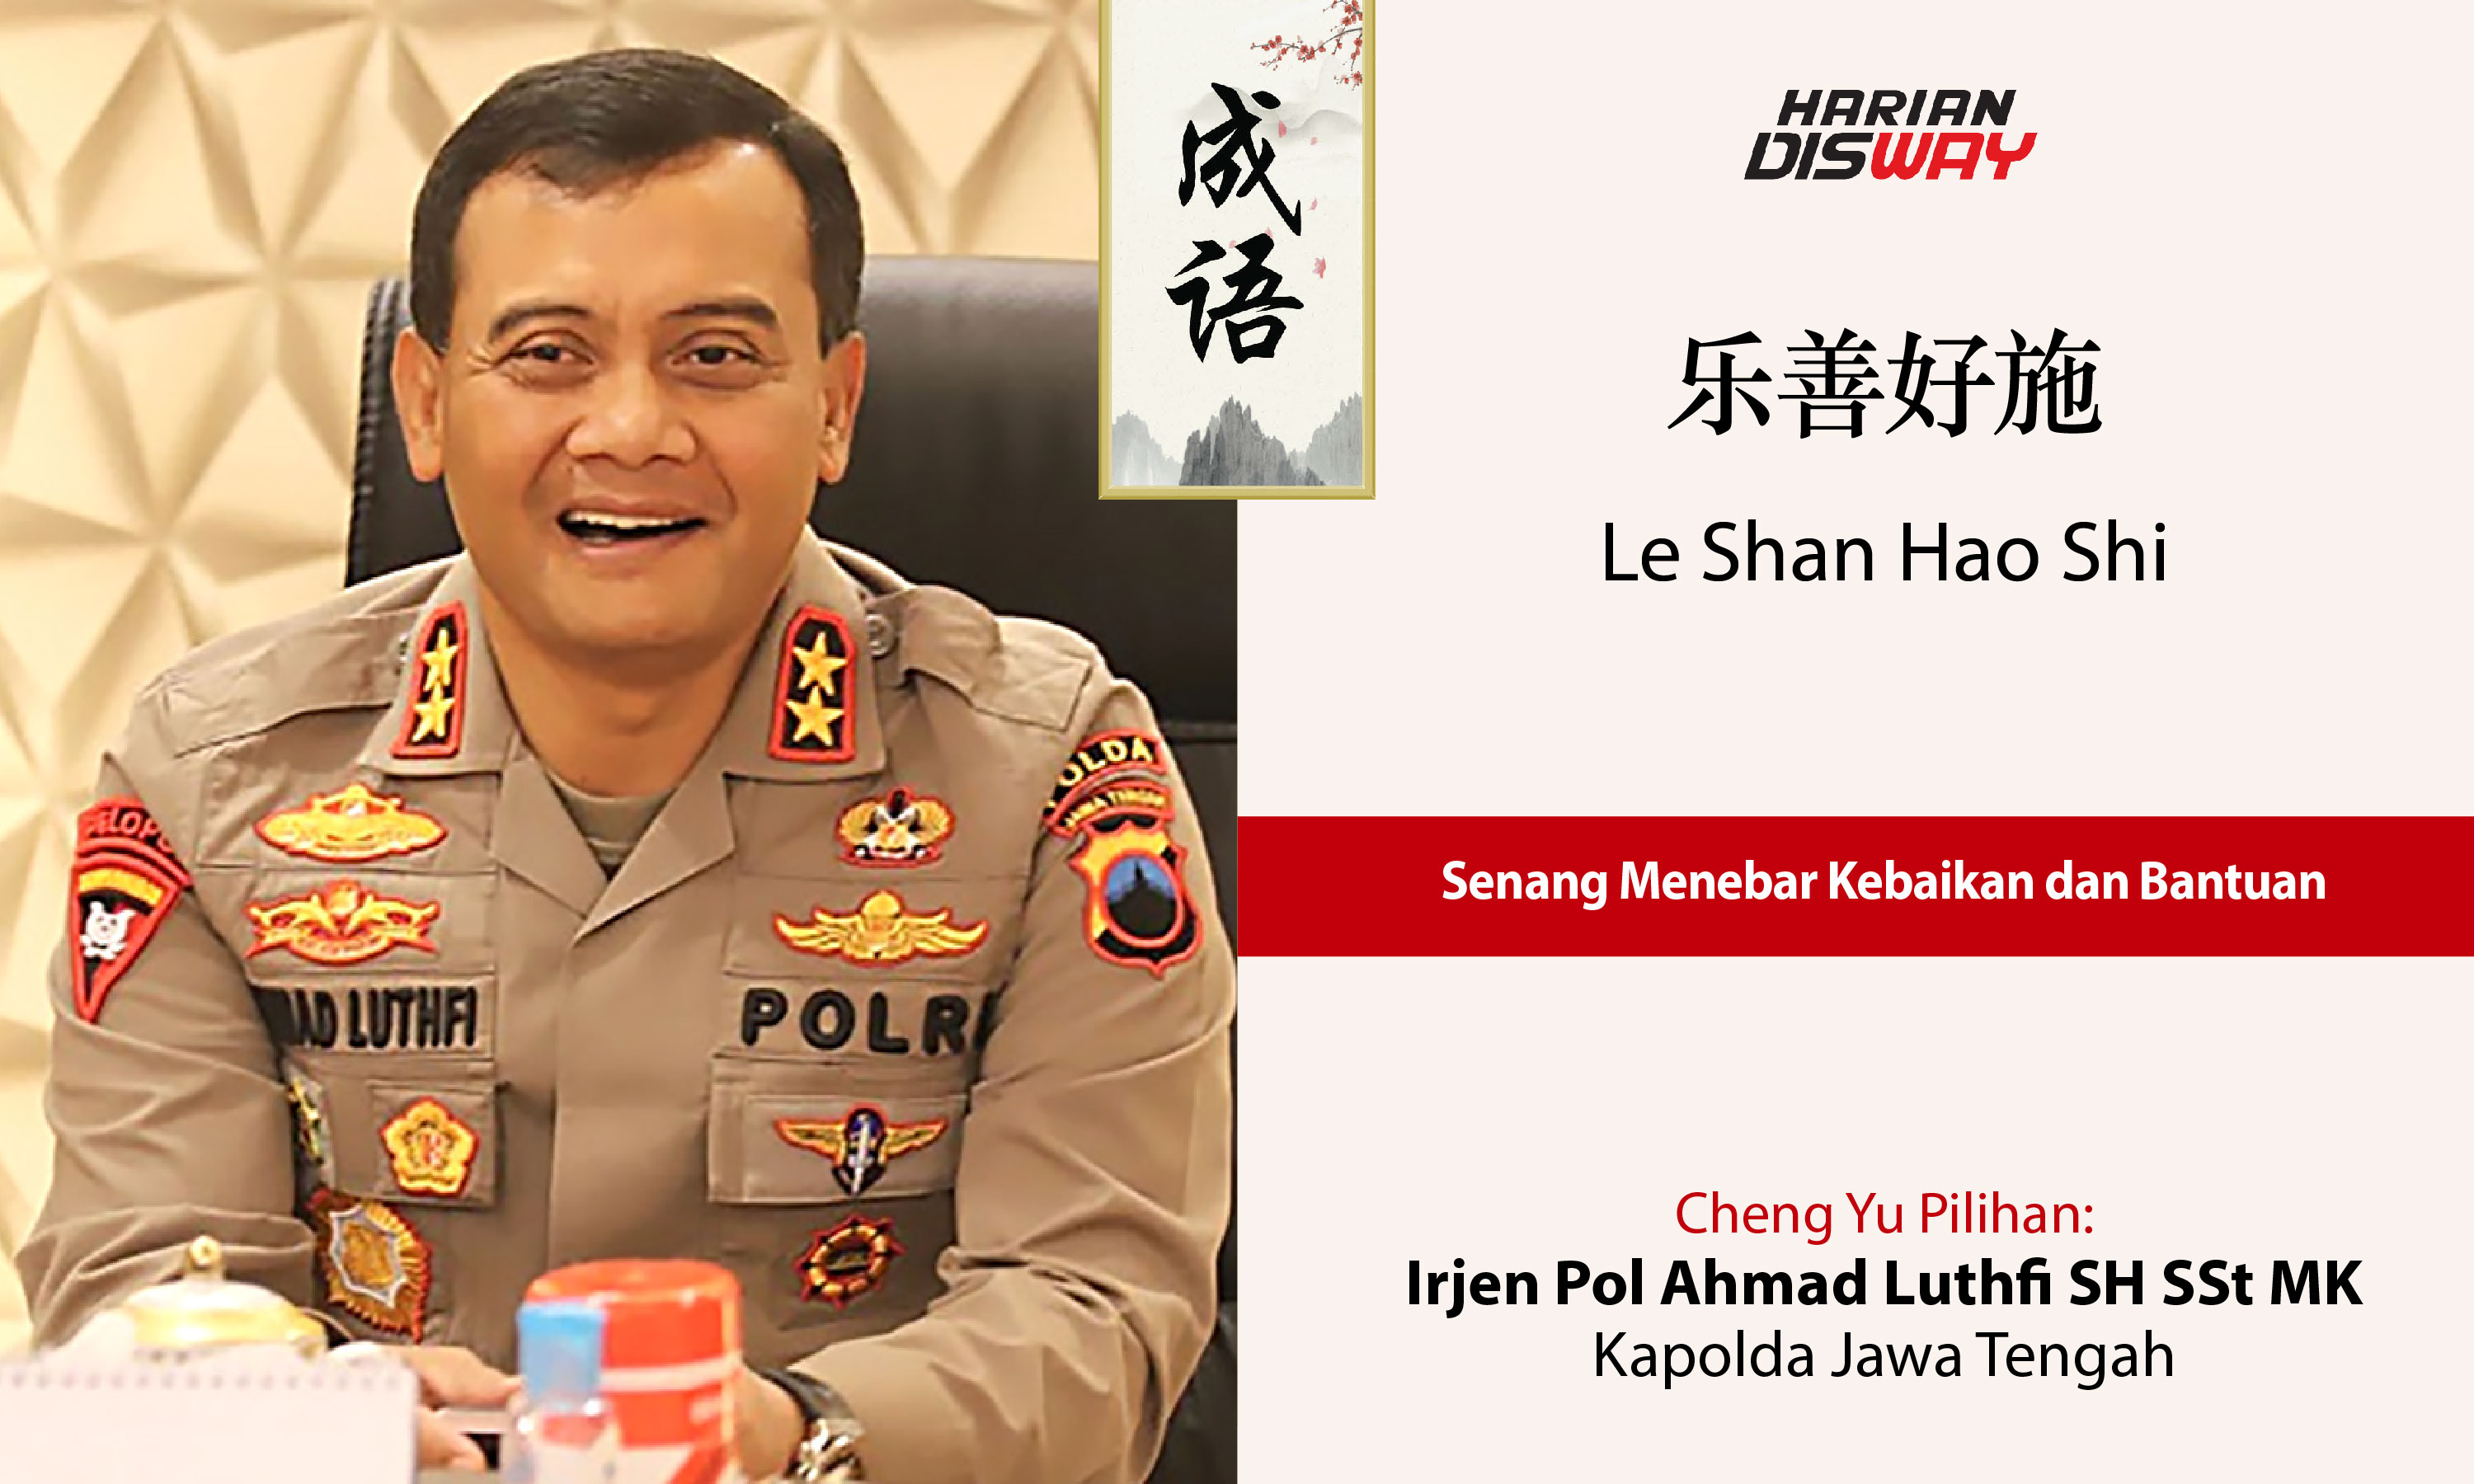 Cheng Yu Pilihan Kapolda Jawa Tengah Irjen Pol Ahmad Luthfi SH SSt MK: Le Shan Hao Shi